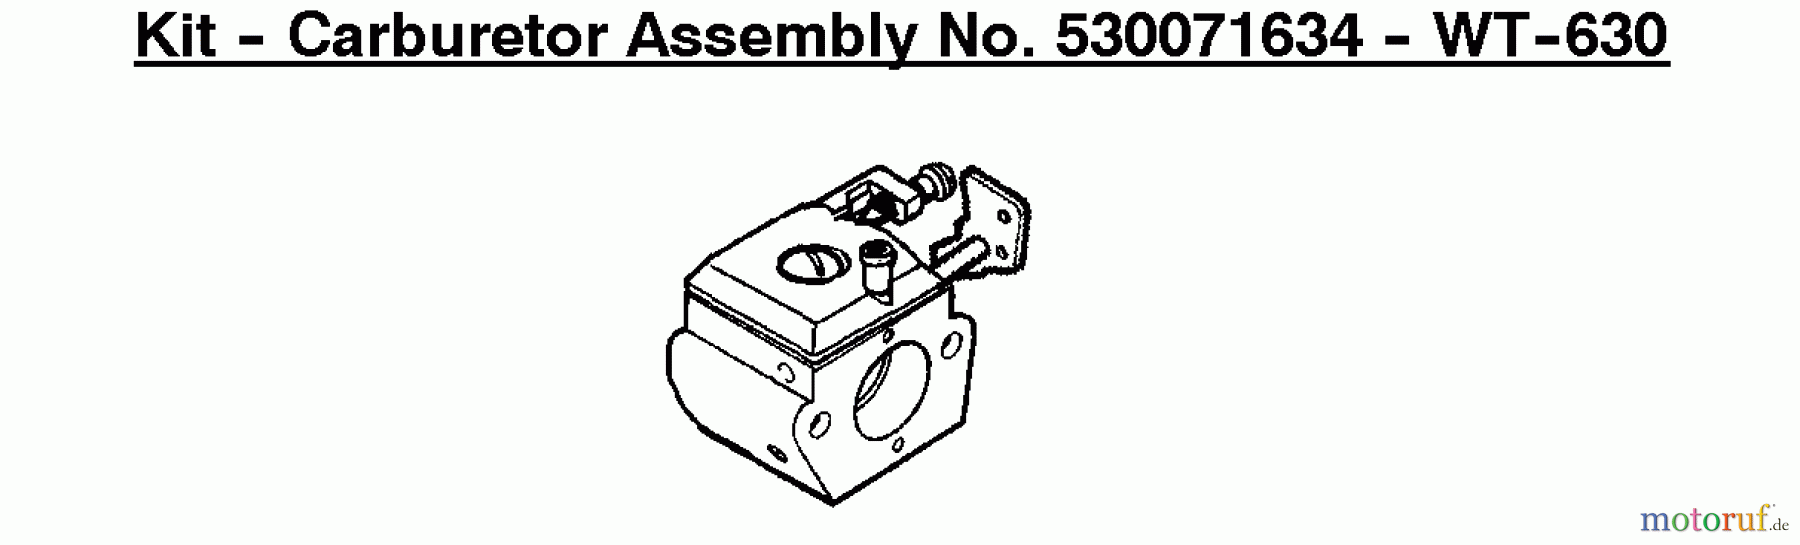  Poulan / Weed Eater Kantenschneider PE550 (Type 2) - Weed Eater Edger Kit - Carburetor Assembly